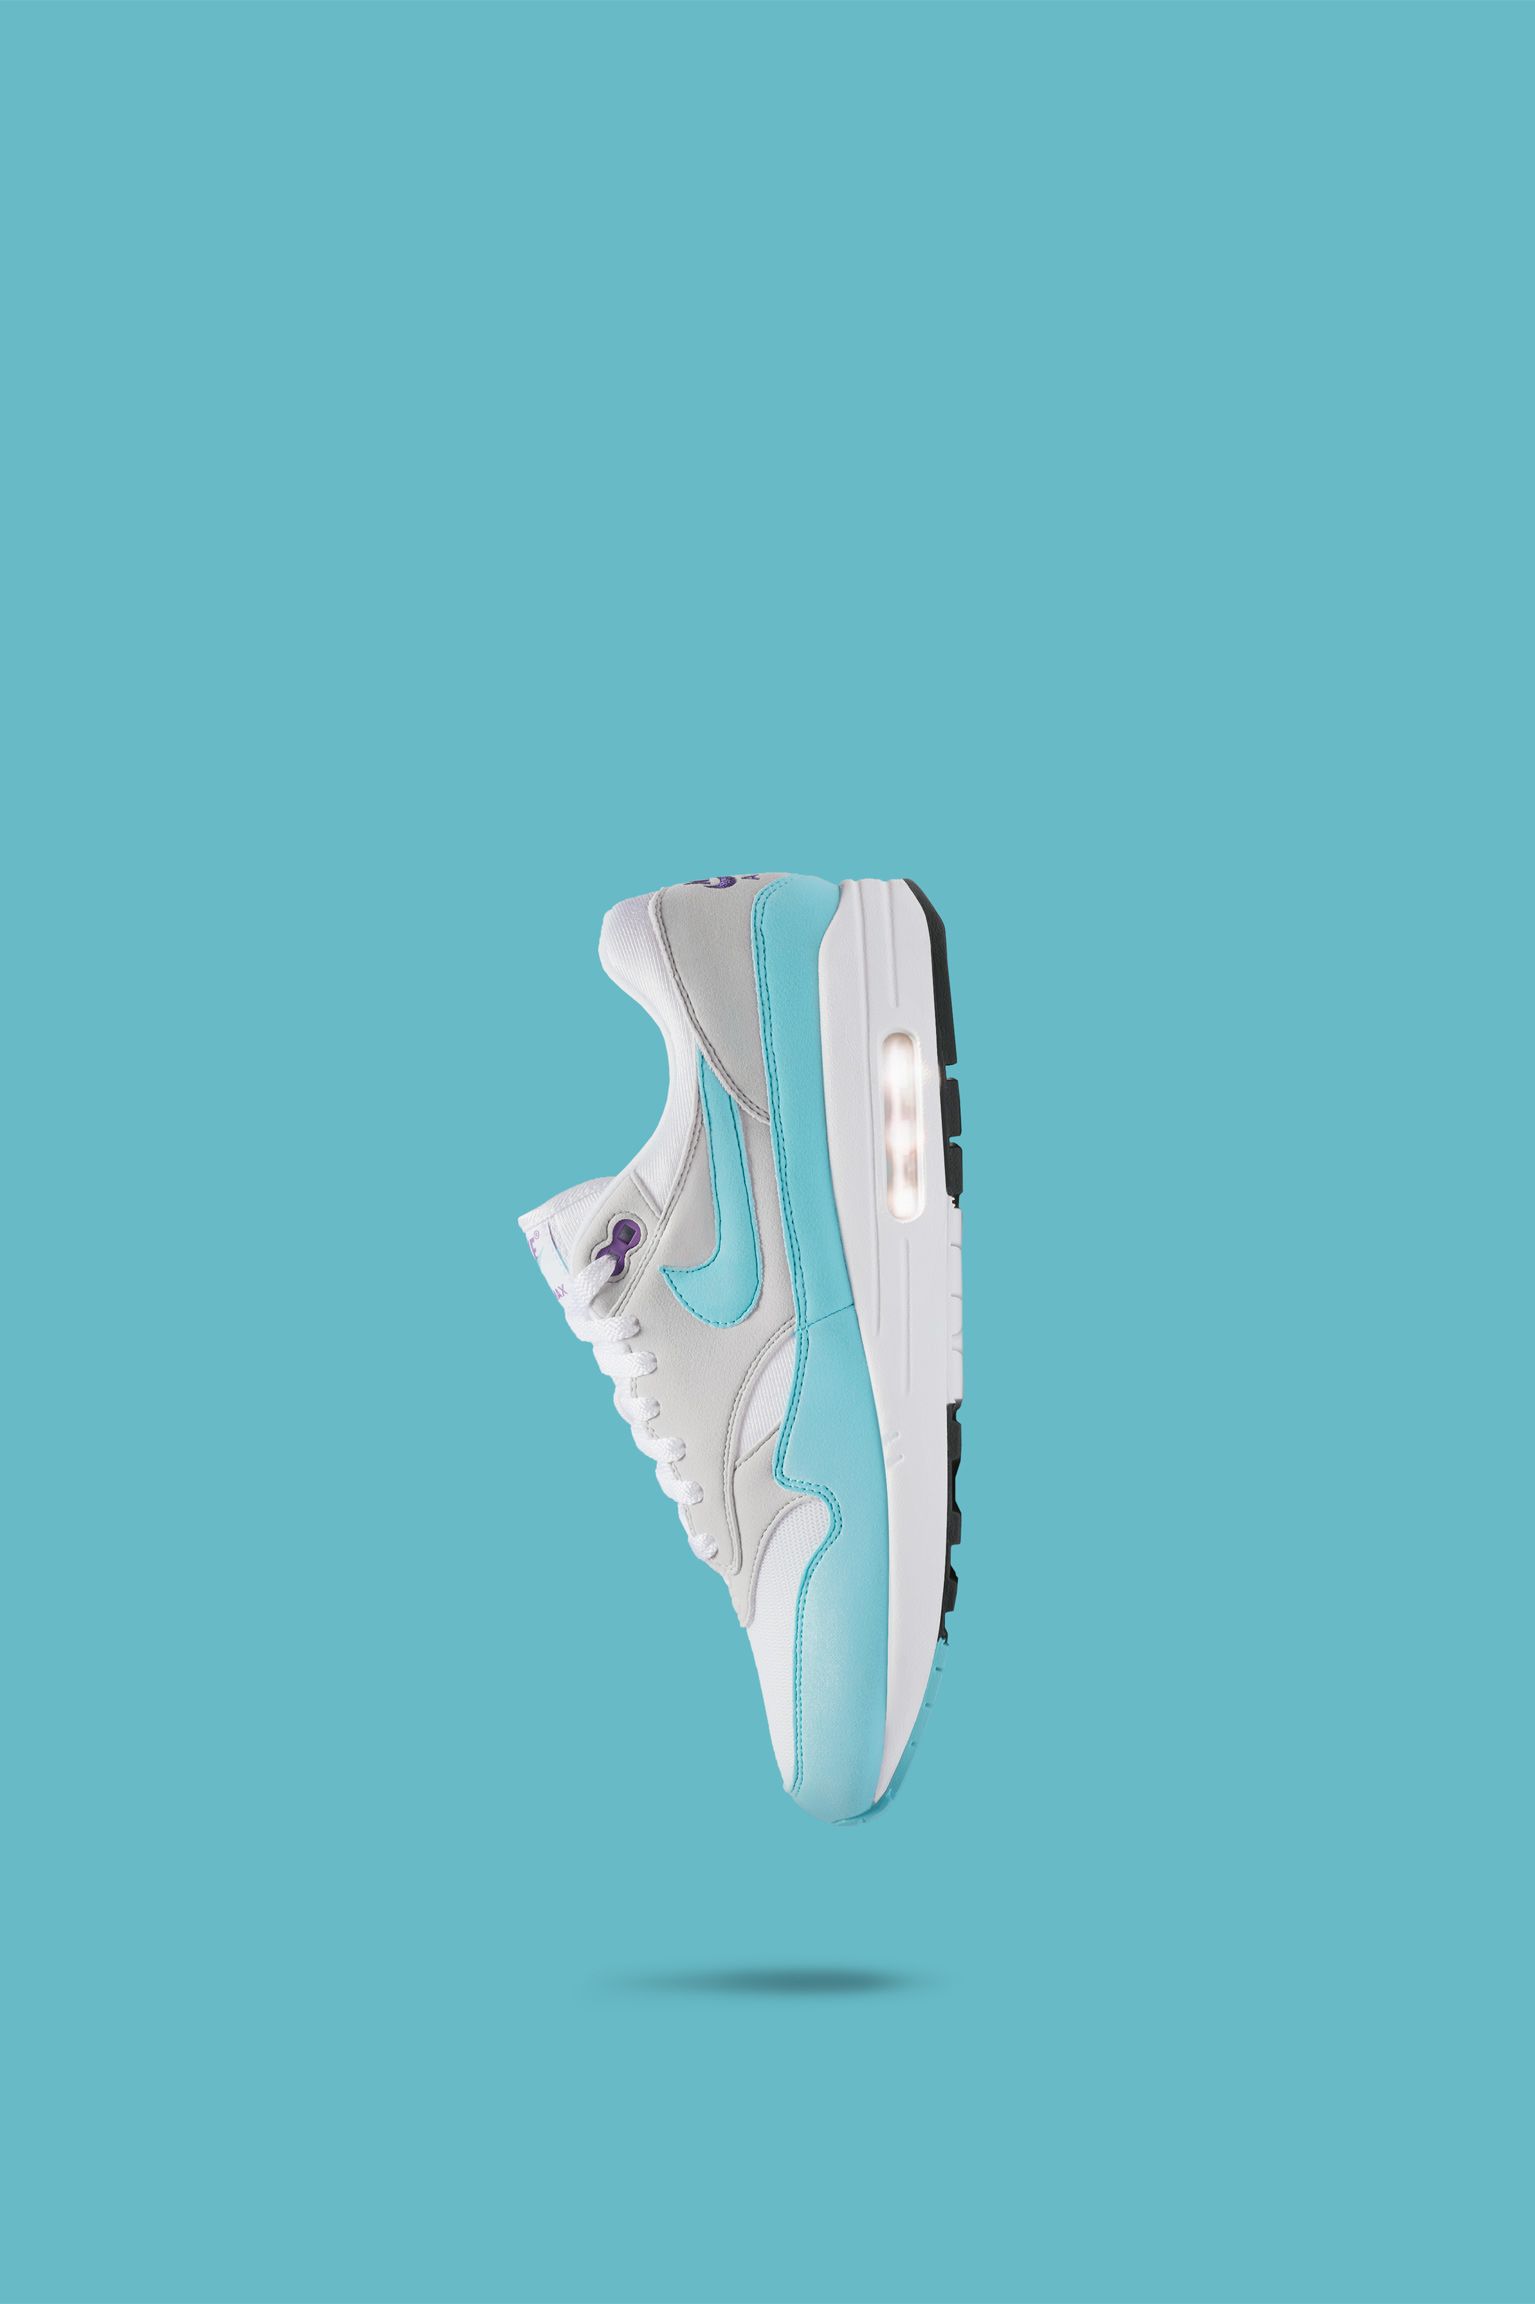 soft wipe threshold Nike Air Max 1 Anniversary 'White & Aqua' Release Date. Nike SNKRS